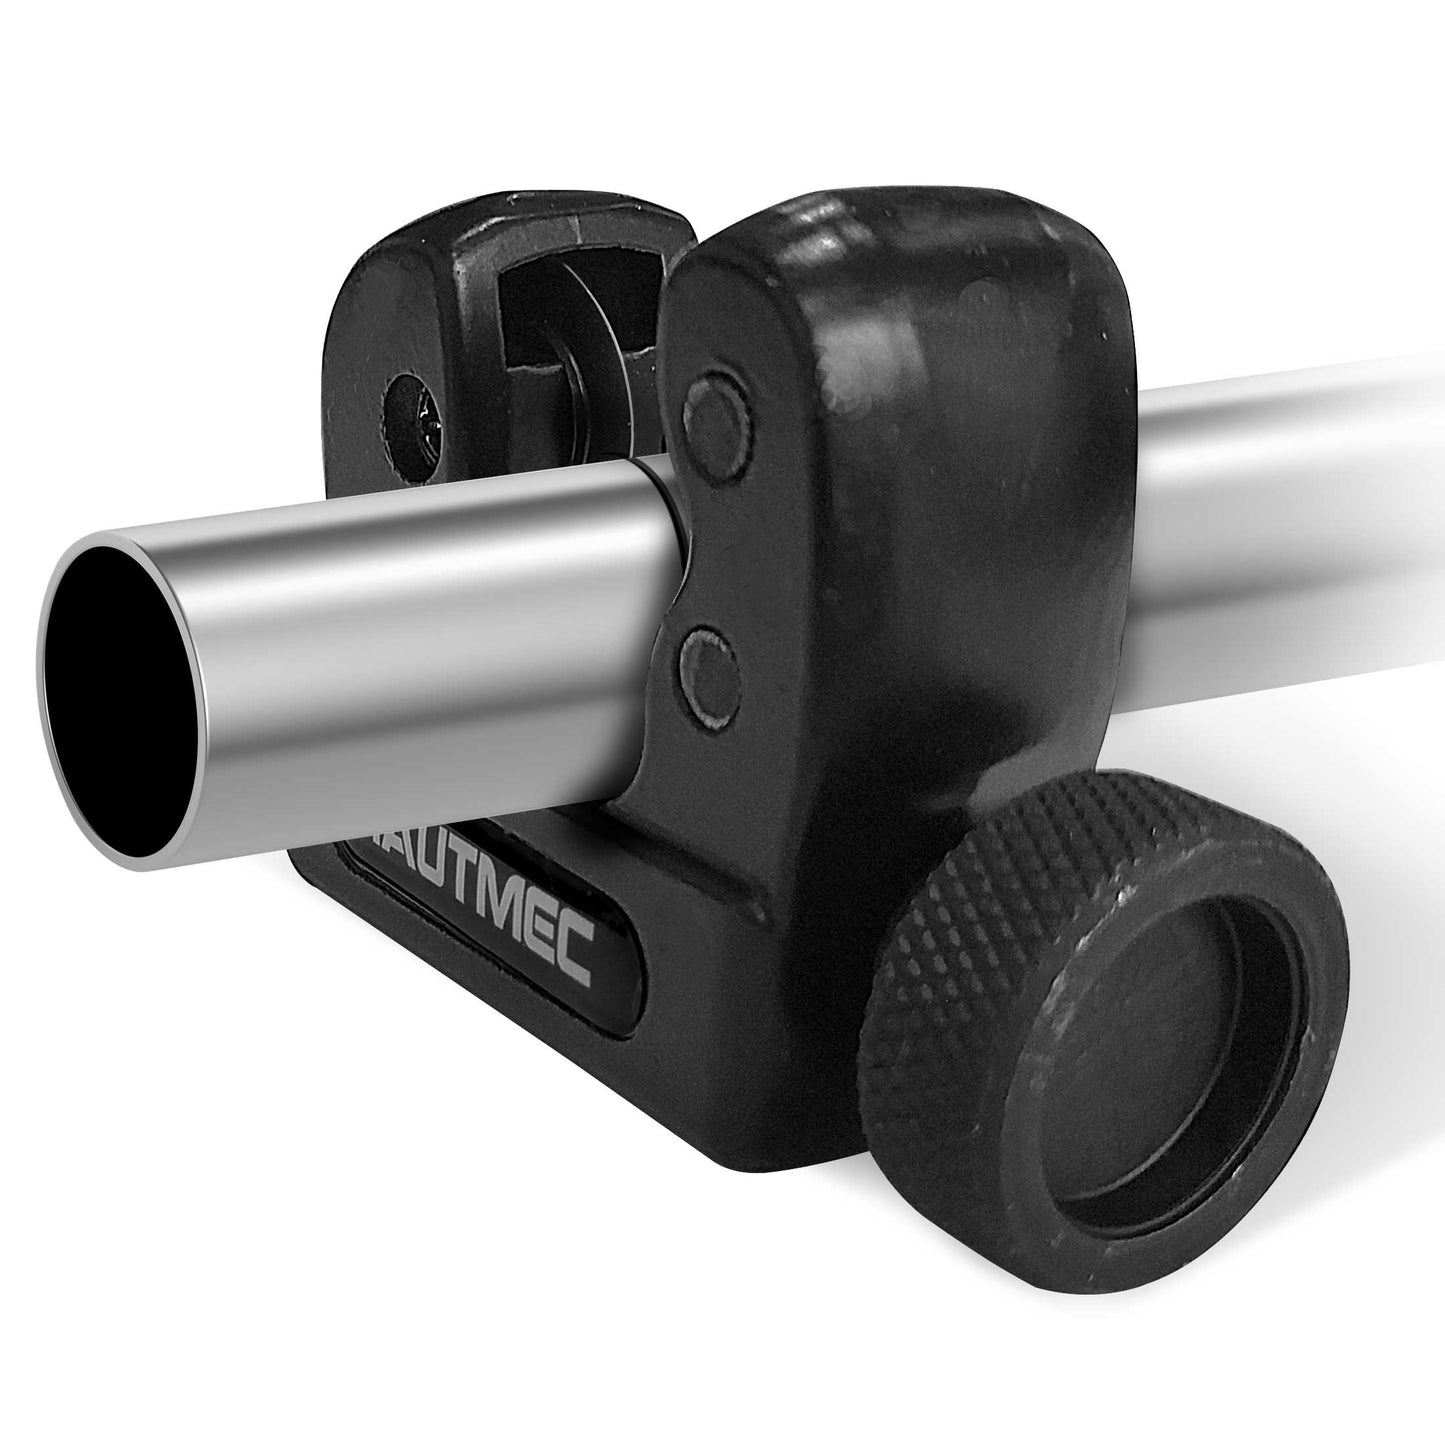 Hautmec Pro Compact Heavy Duty Mini Tube Cutter, 1/8" to 1-1/8" OD (3-30mm) Tubing Cutter, Heavy Duty Pipe Cutter for PVC, Copper, Aluminum, and Thin Stainless Steel Tube HT0133-TC